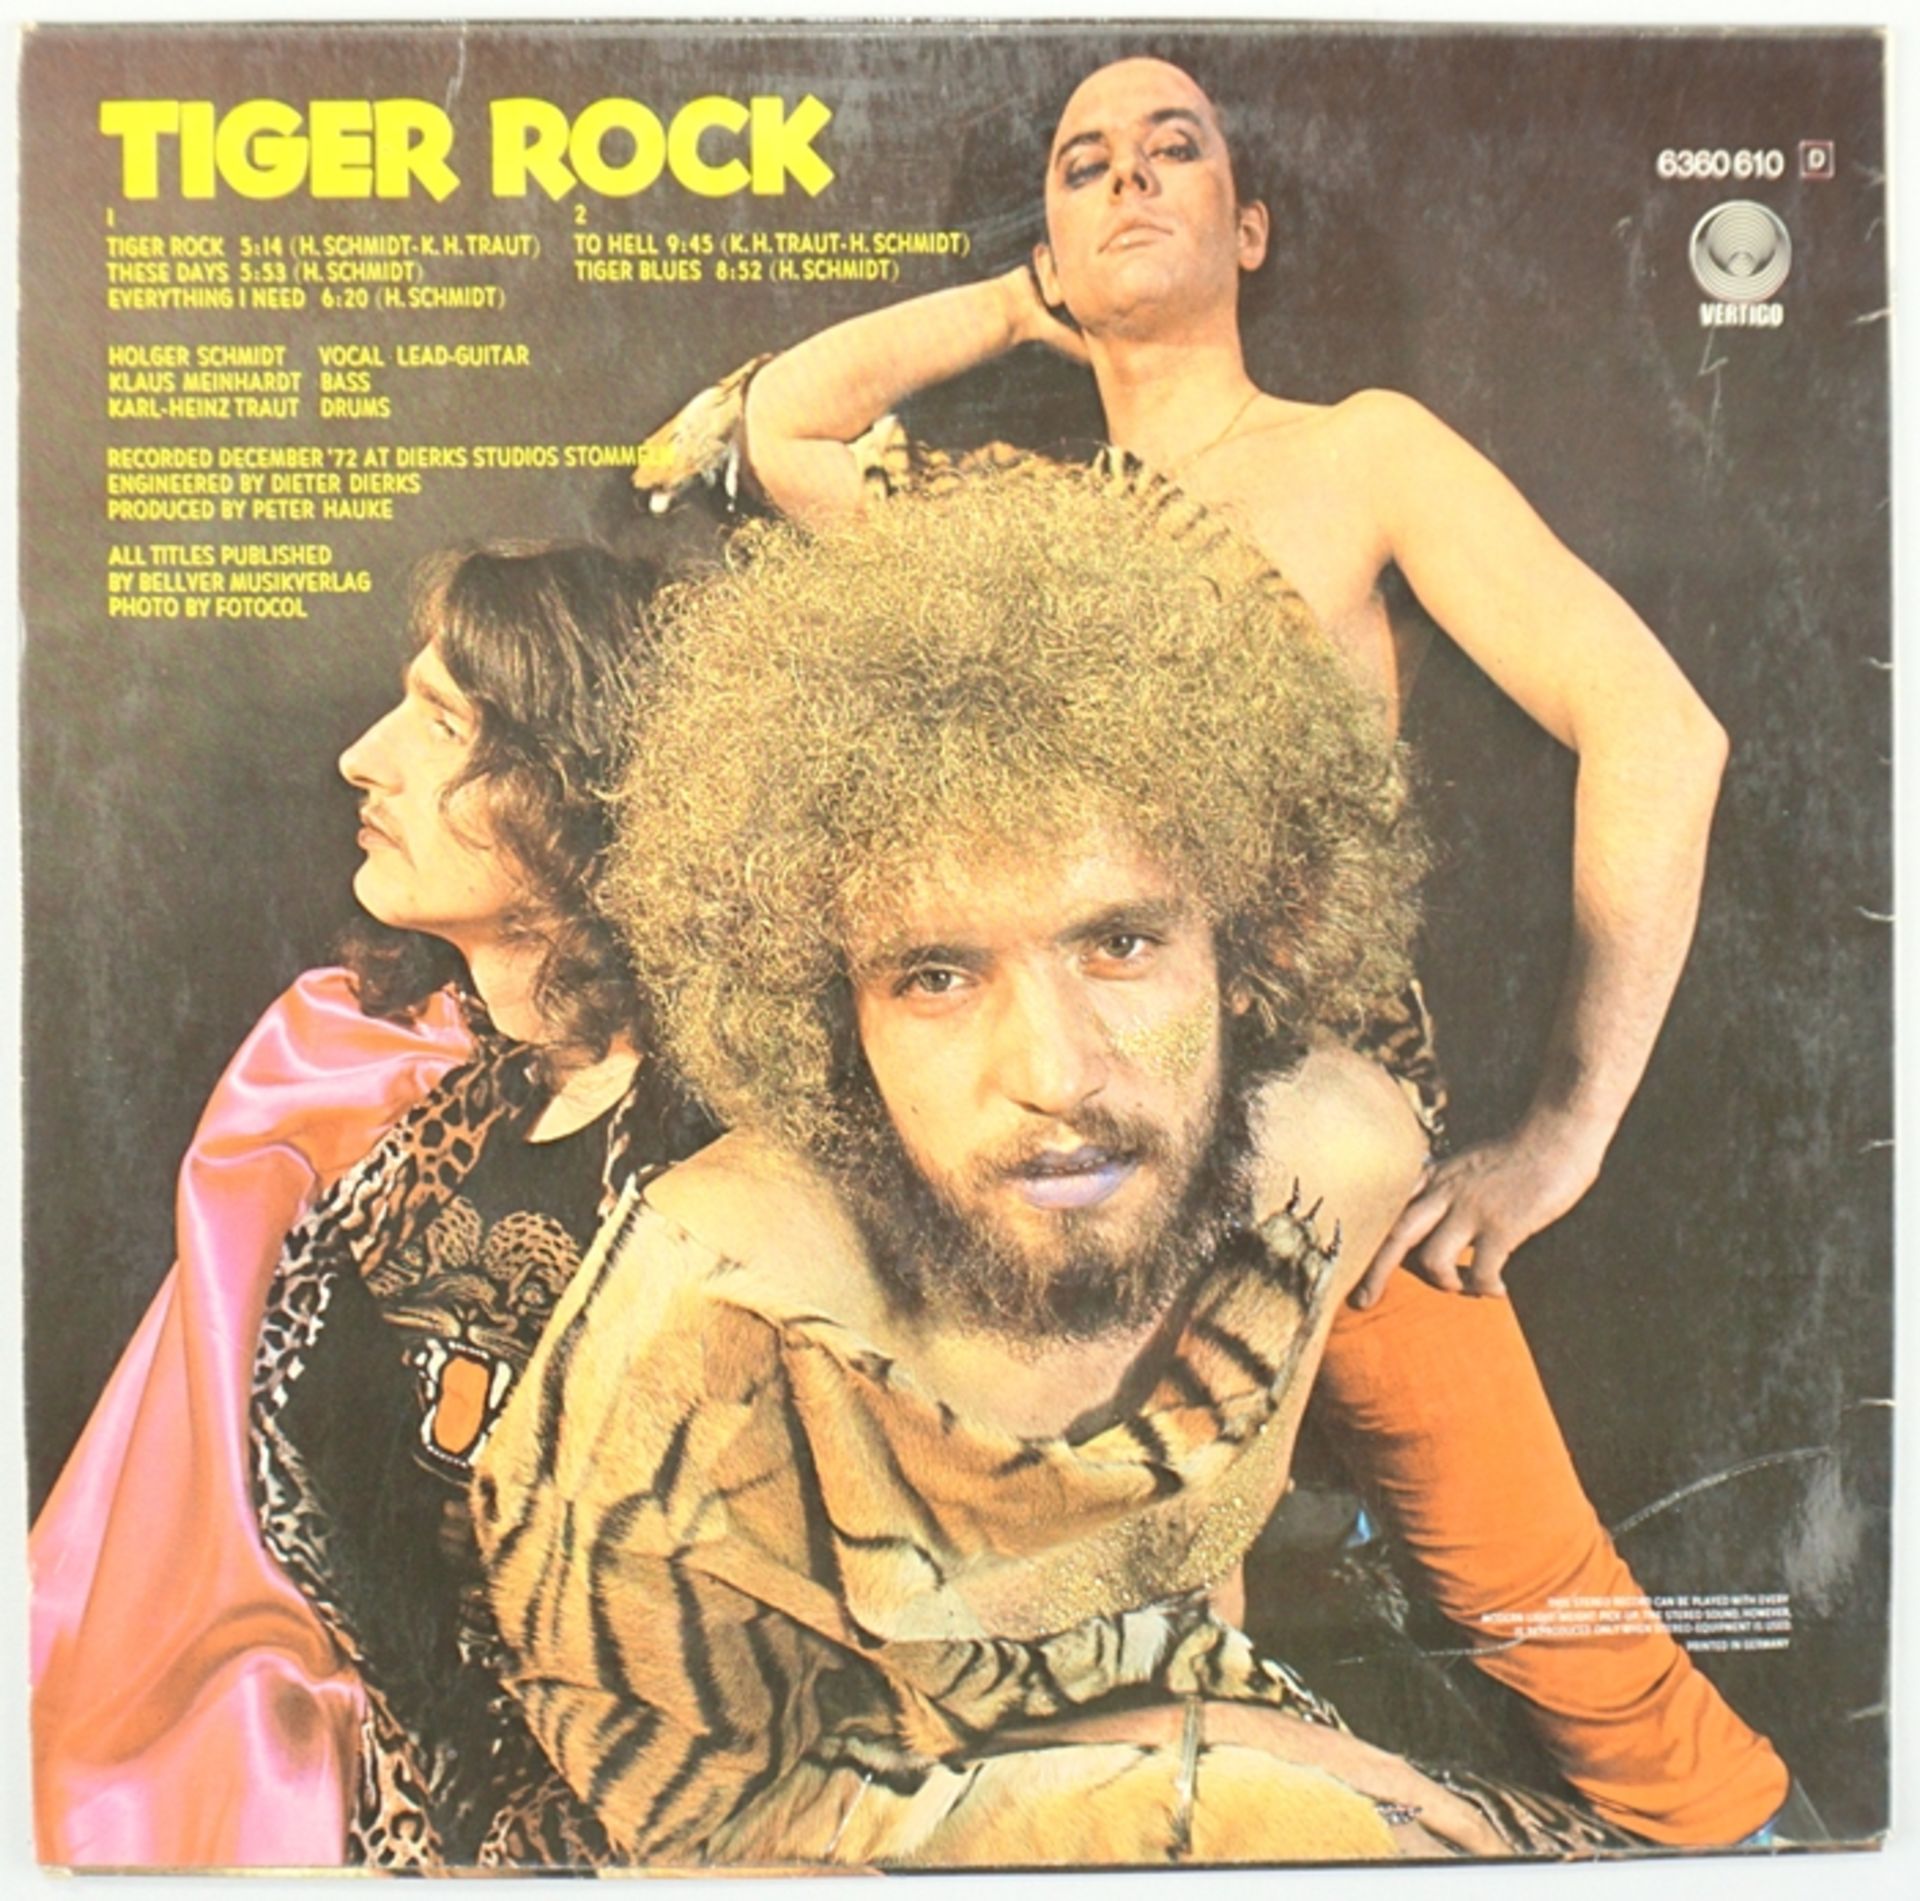 Vinyl LP Tiger B. Smith - Tiger Rock, VERTICO, 1972 - Bild 2 aus 2